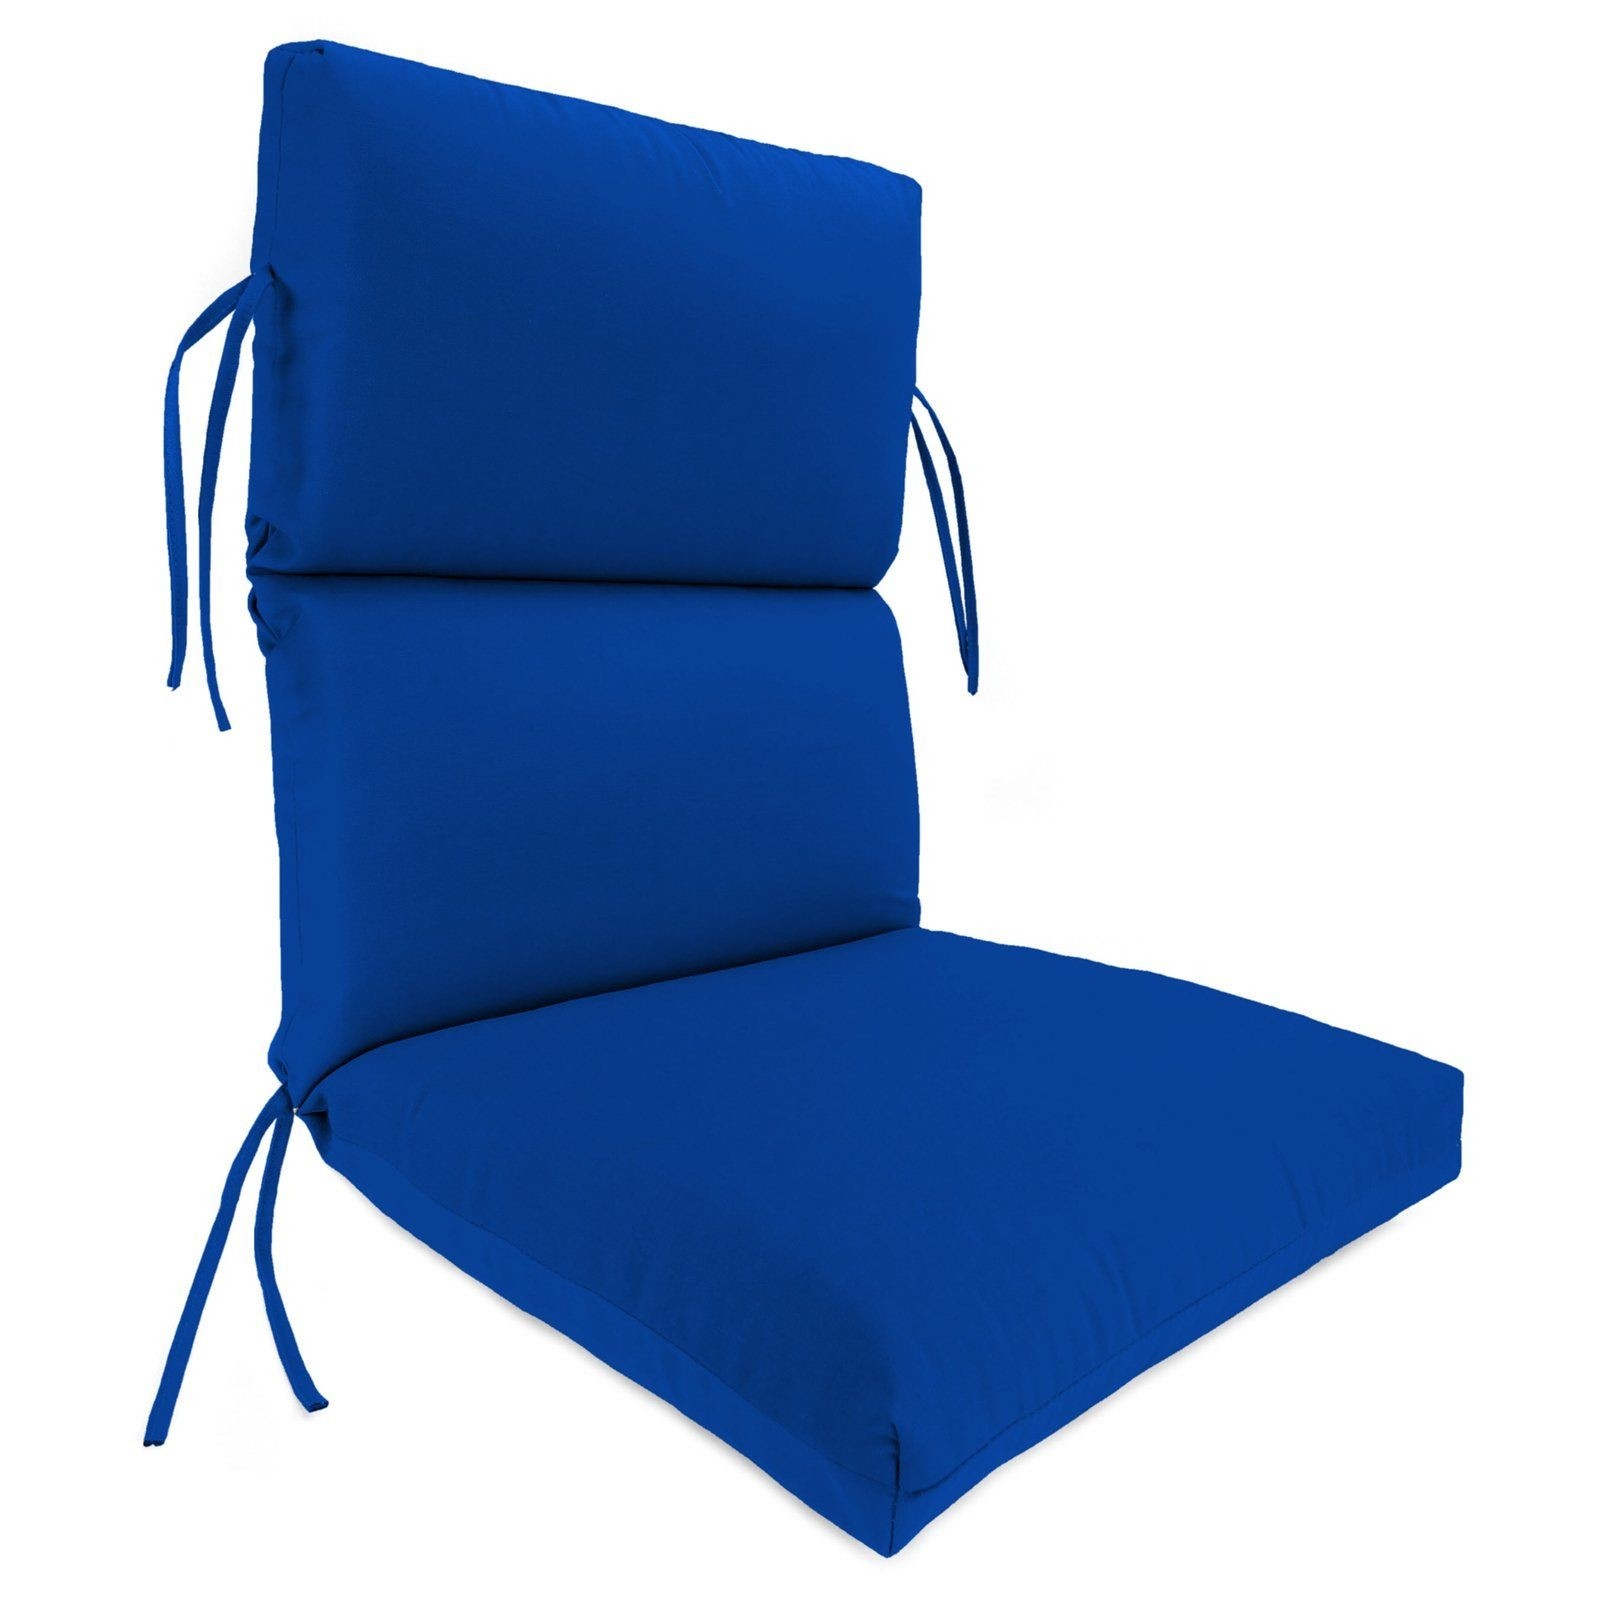 Jordan Manufacturing Jordan Manufacturing Sunbrella High Back 20 in. Dining Chair Cushion, Pacific Blue, Sunbrella Acrylic